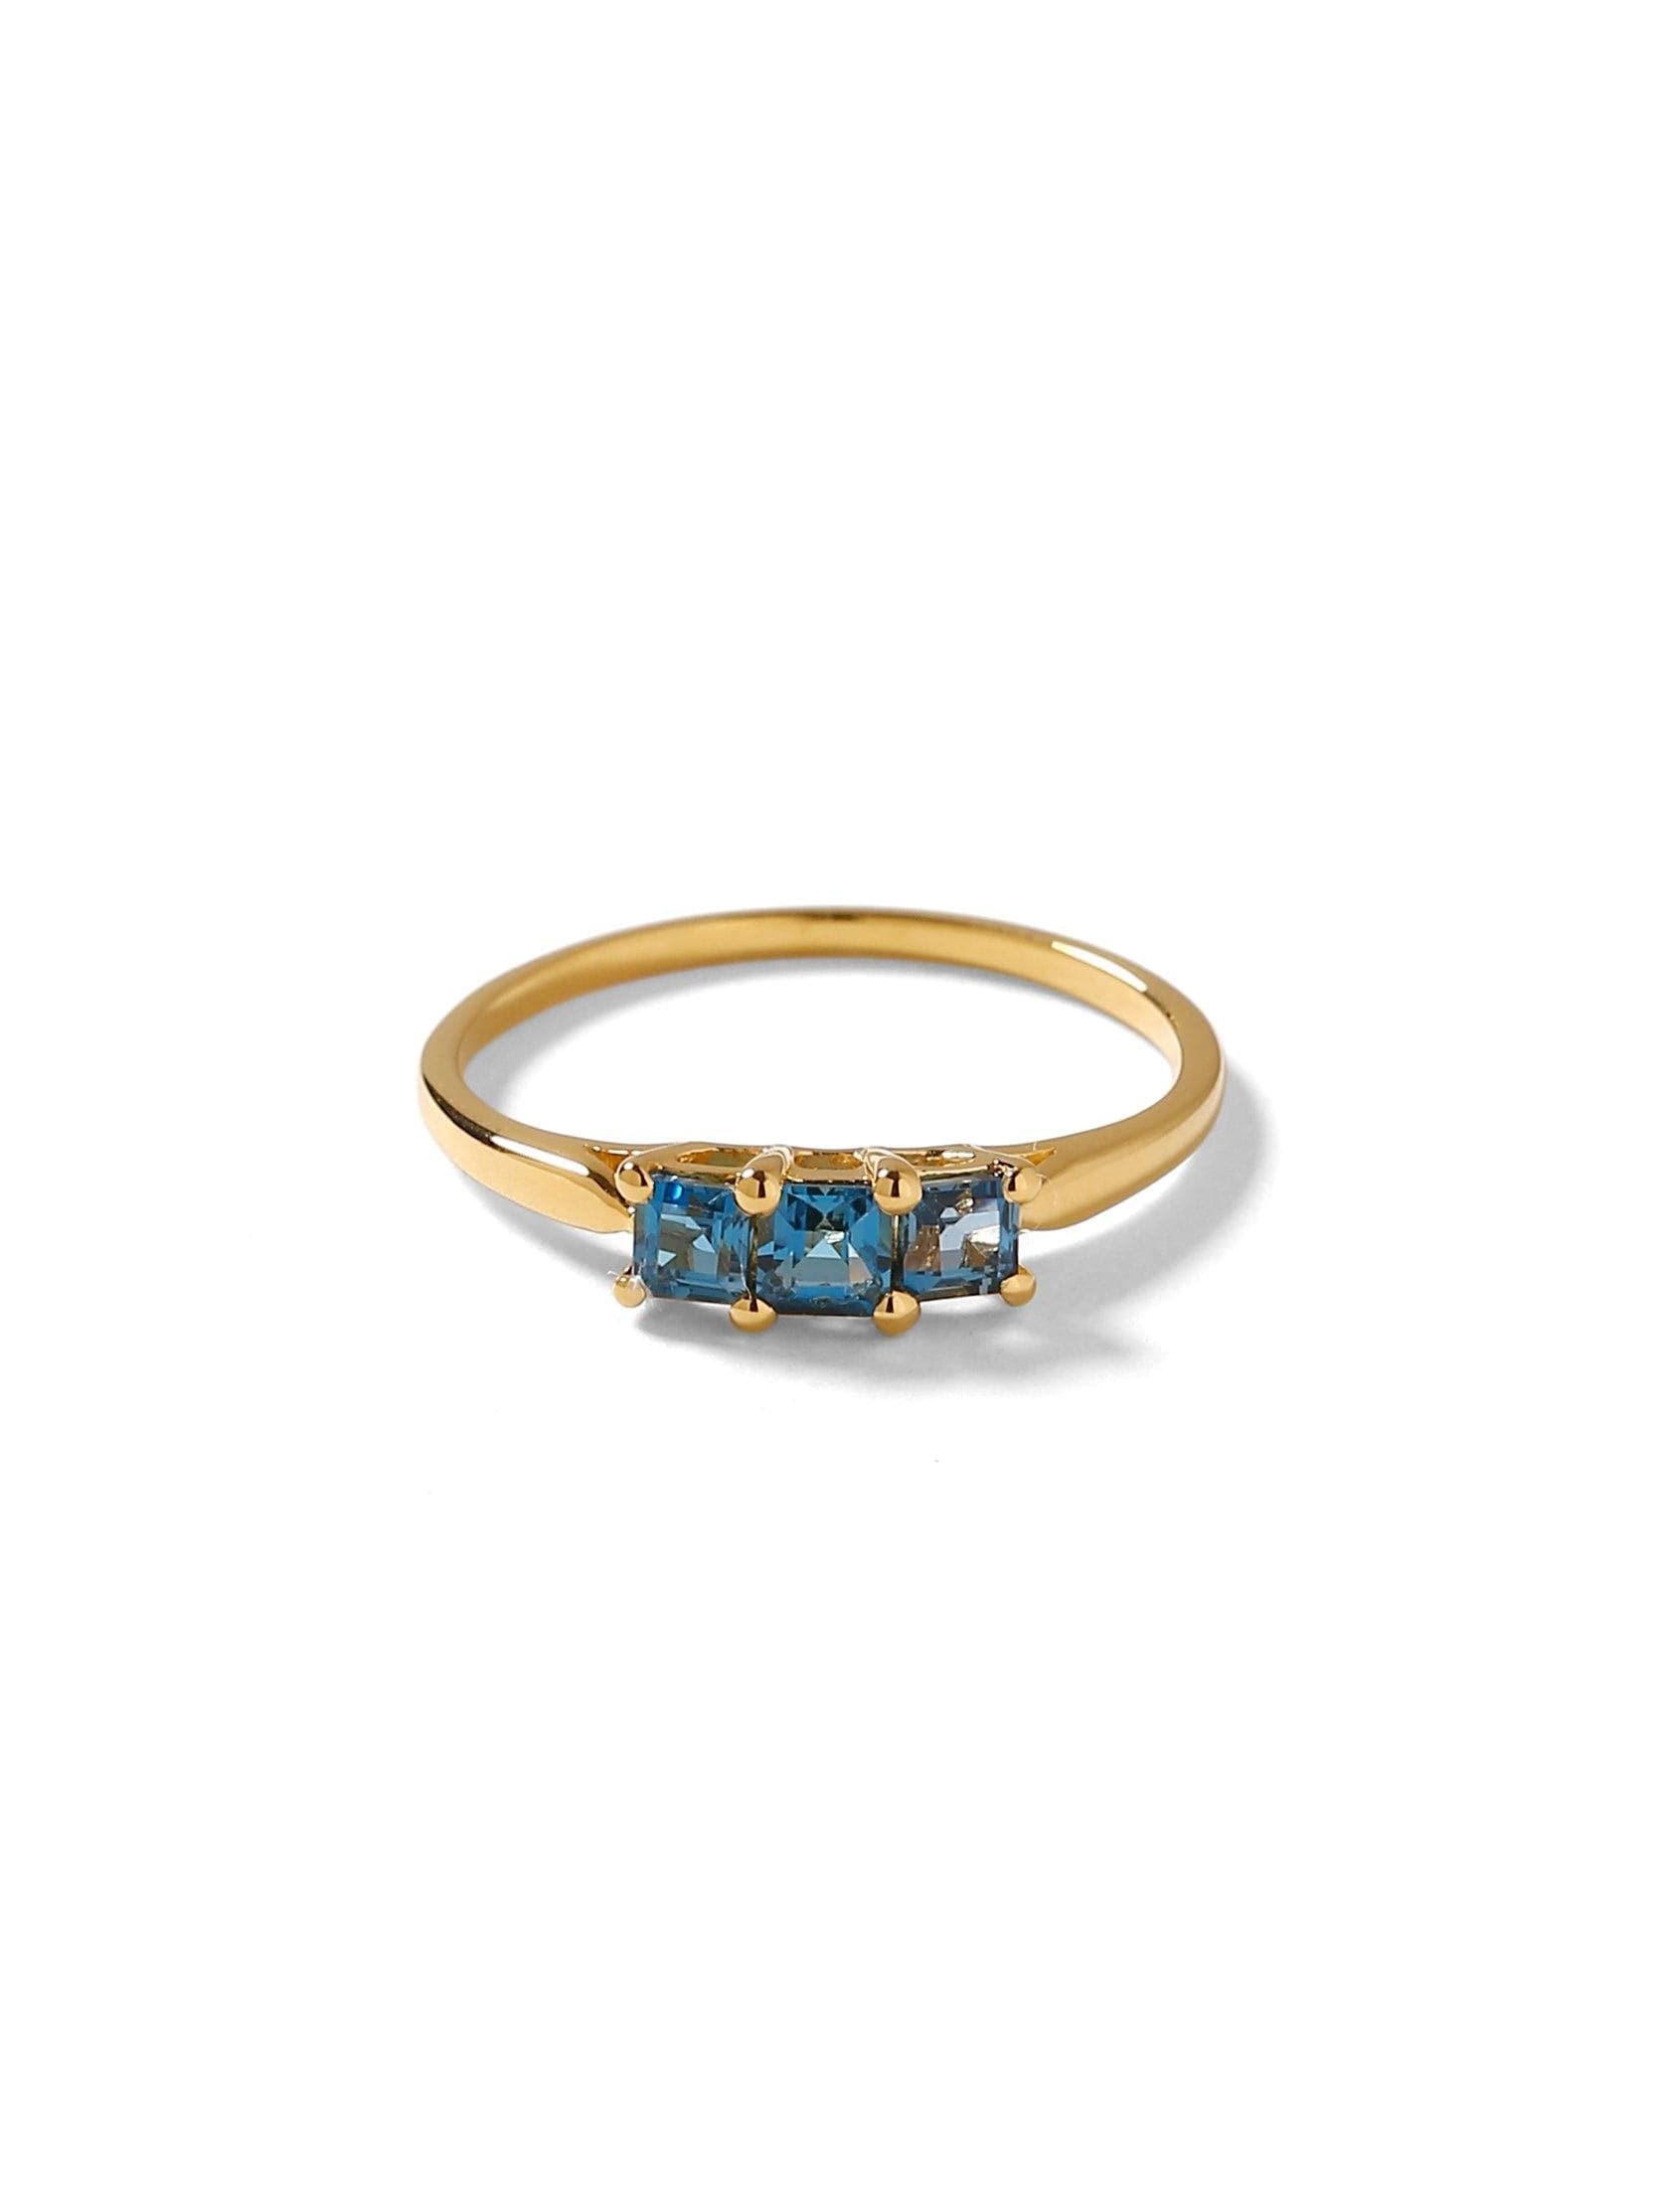 0.65 Ct. London Blue Topaz Solid 10K Yellow Gold Gemstone Ring - YoTreasure